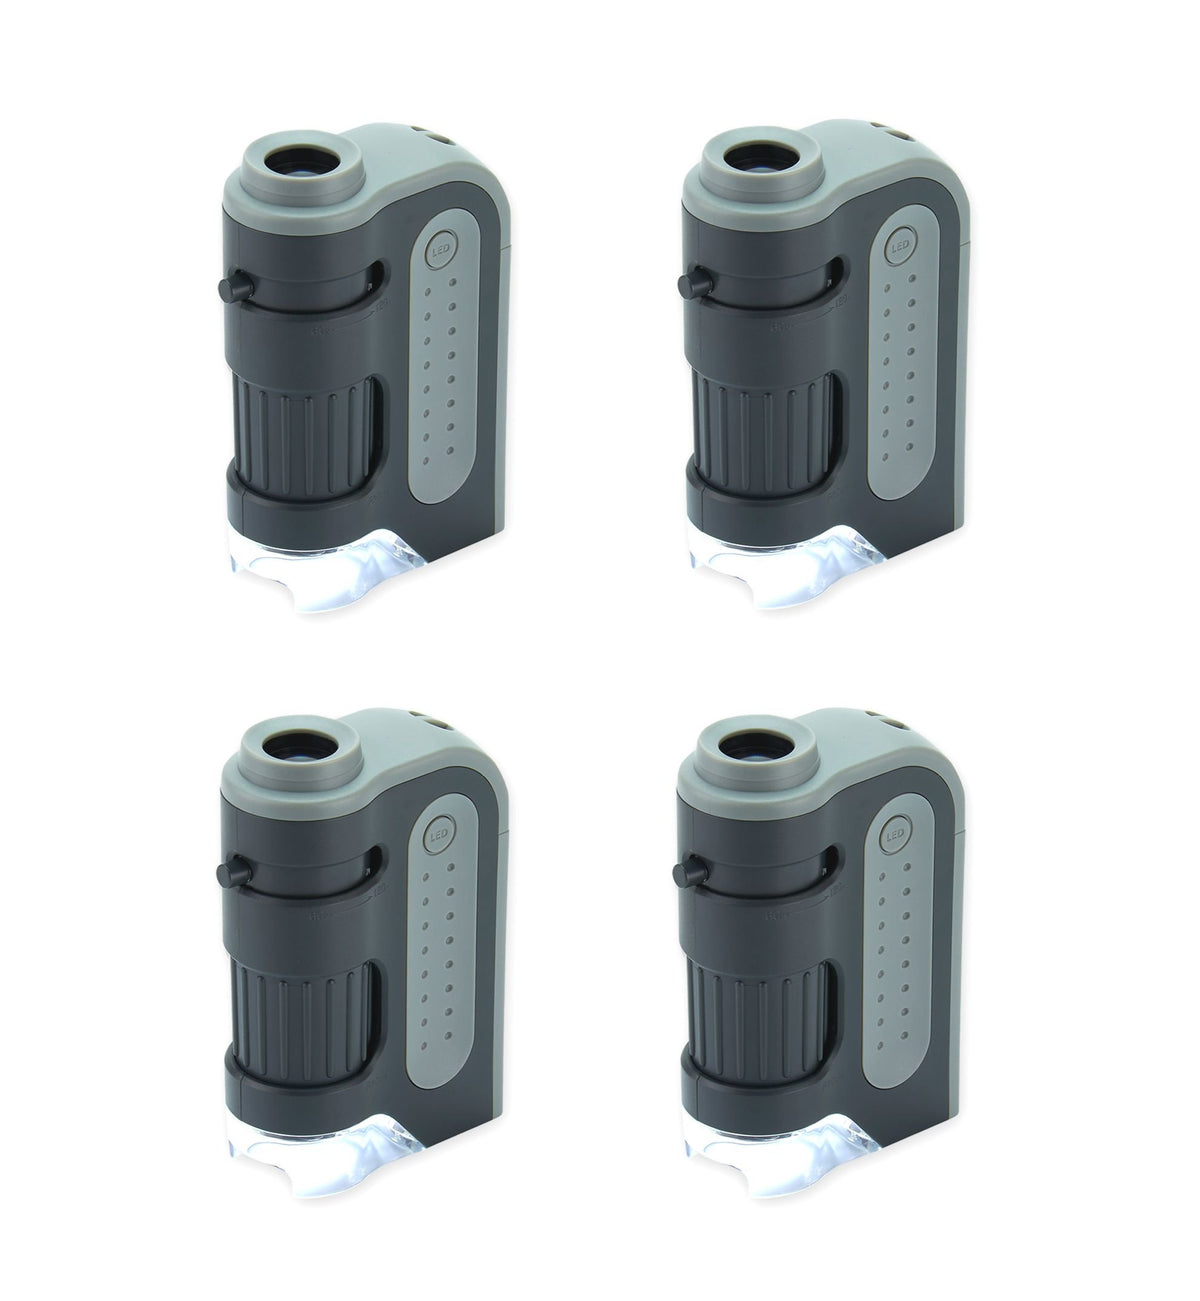 Carson MicroBrite Plus 60x-120x Power LED Lighted Pocket Microscope - Set of 4 (MM-300MU),Black/Grey